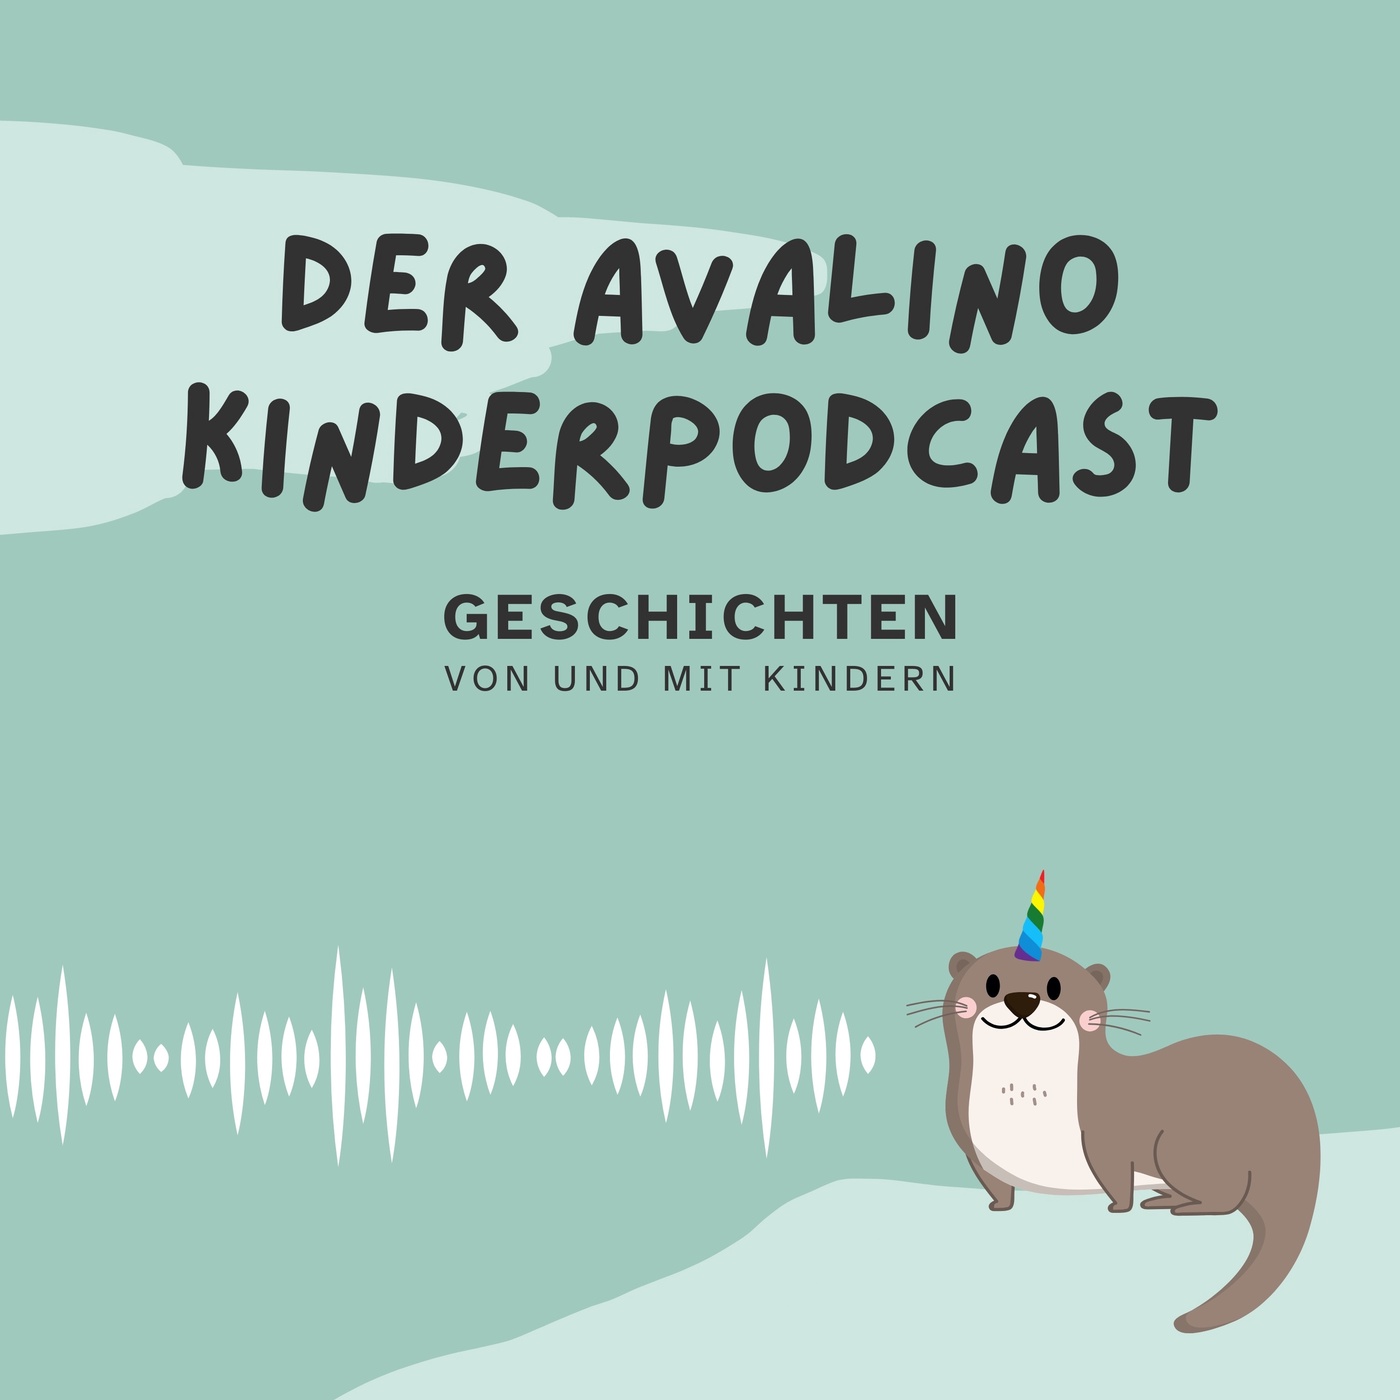 Der Avalino Kinderpodcast